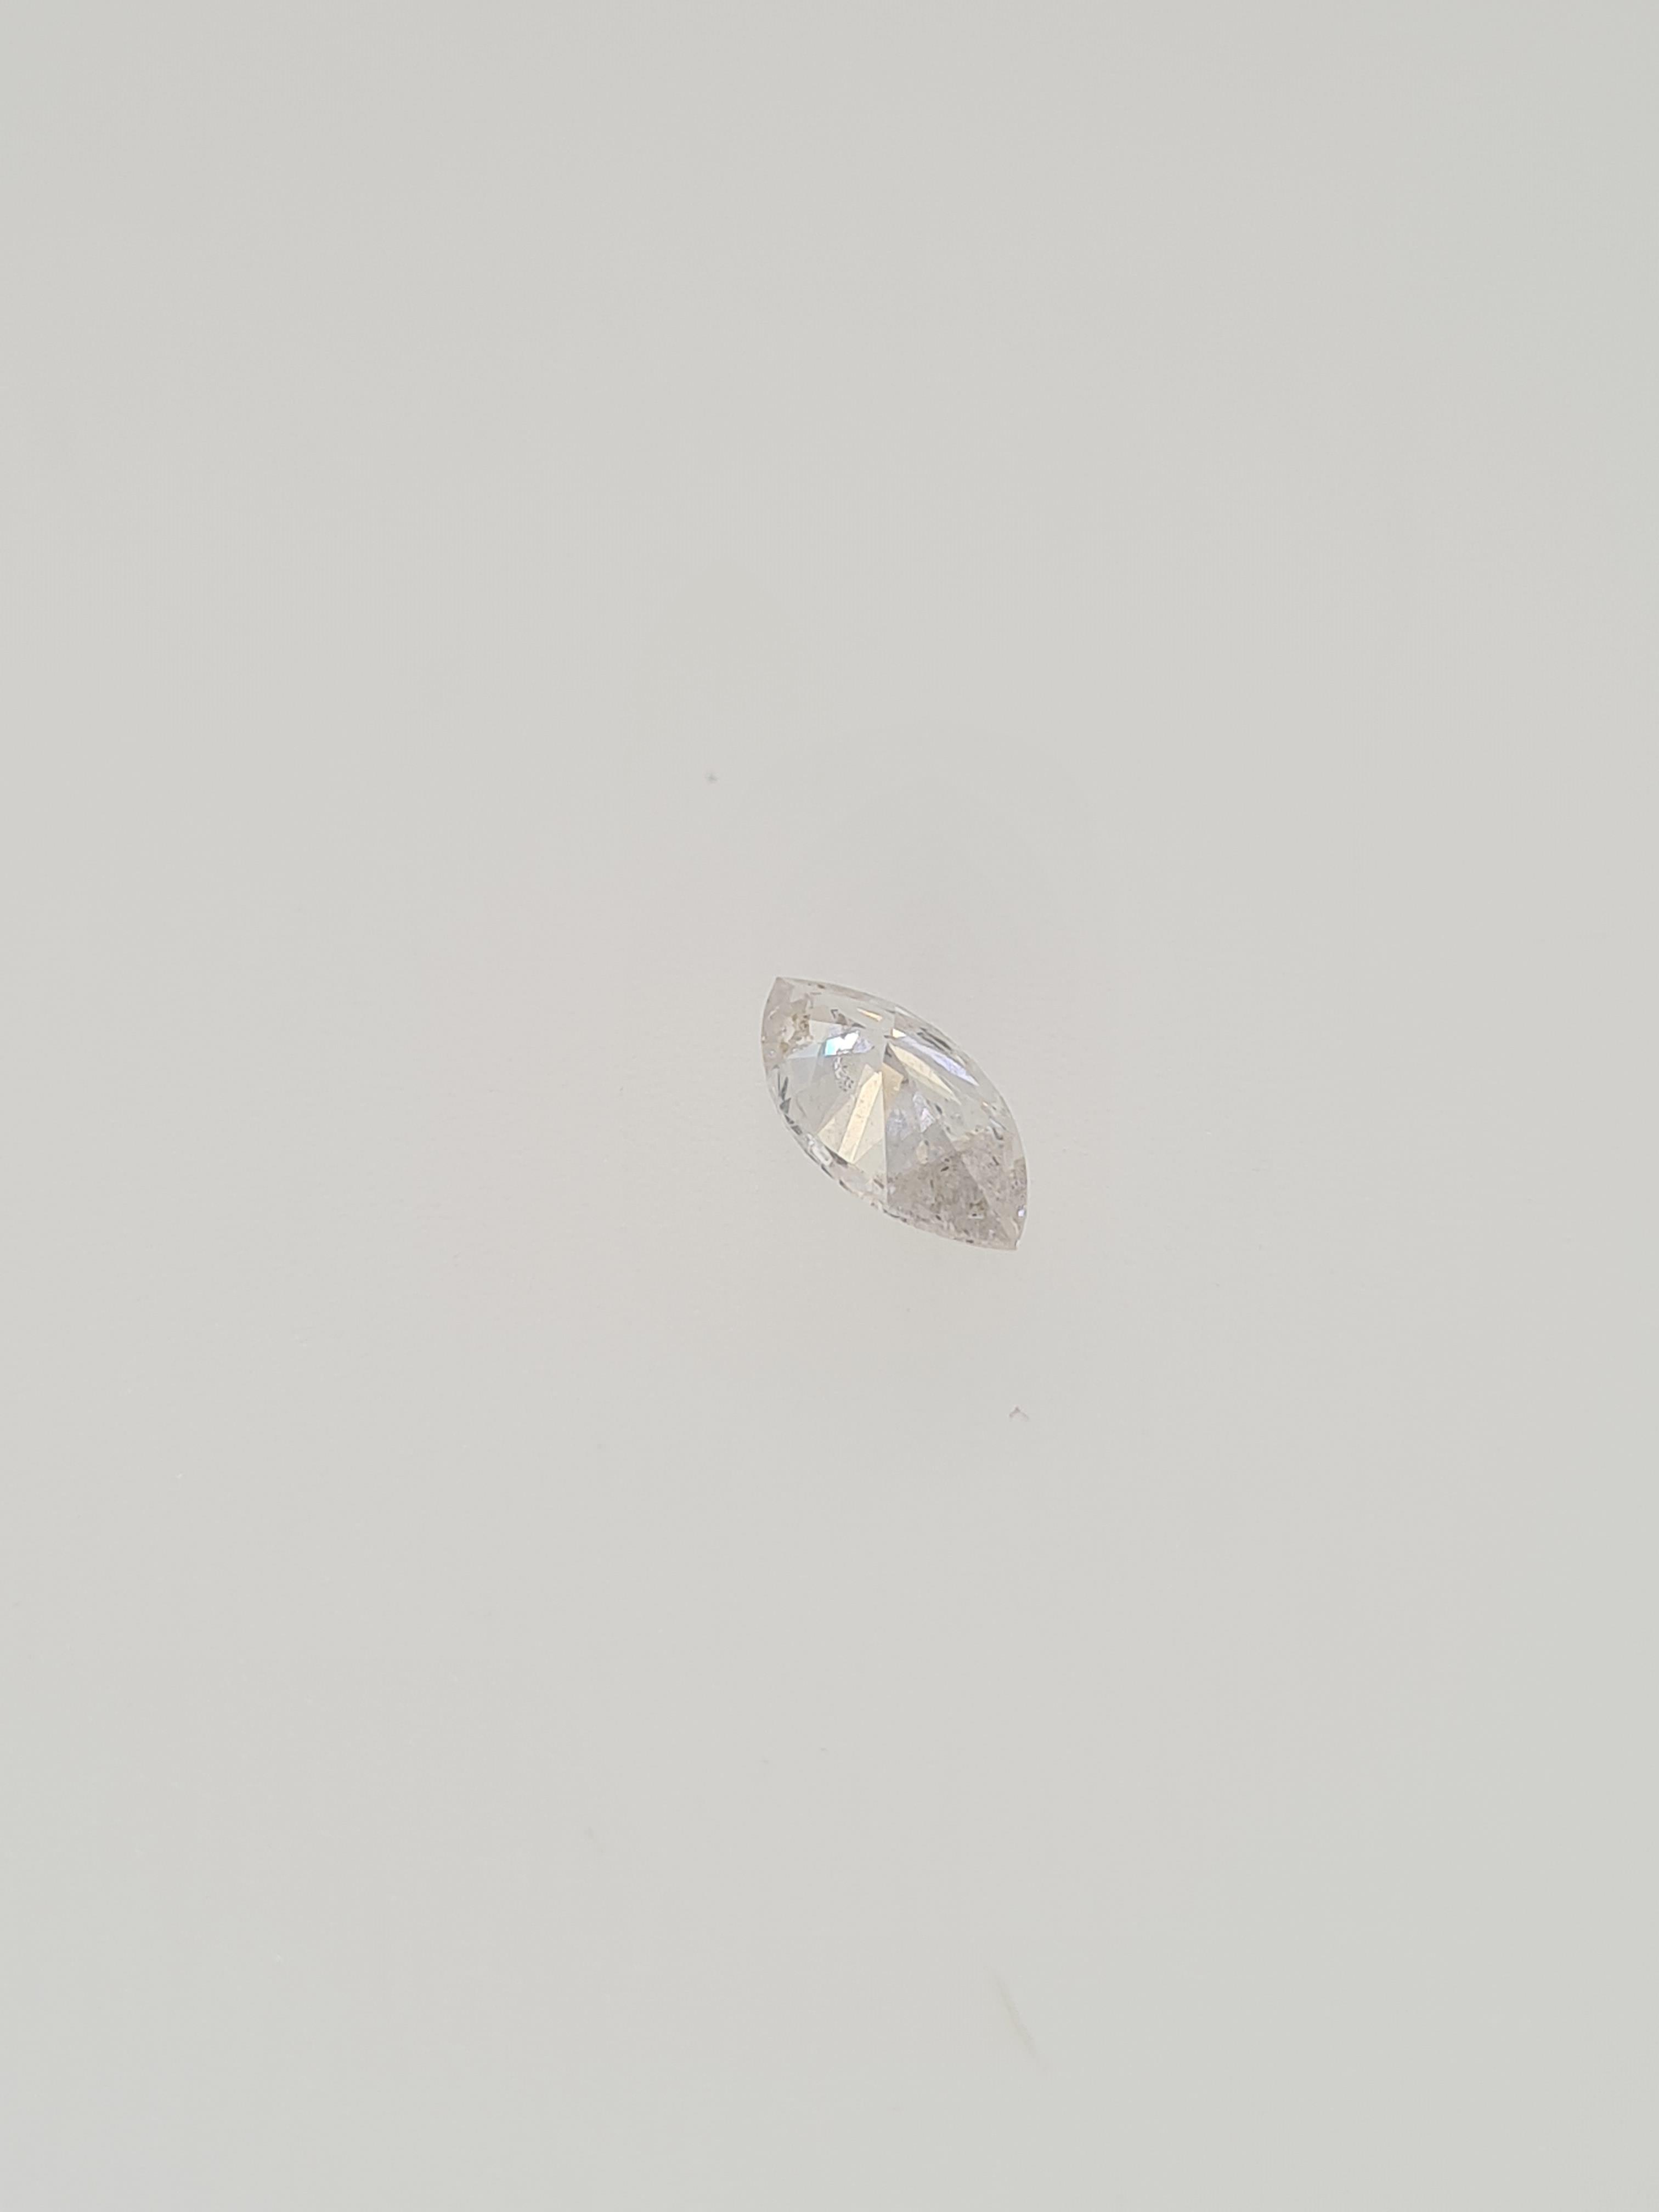 Marquise cut diamond - Image 3 of 6